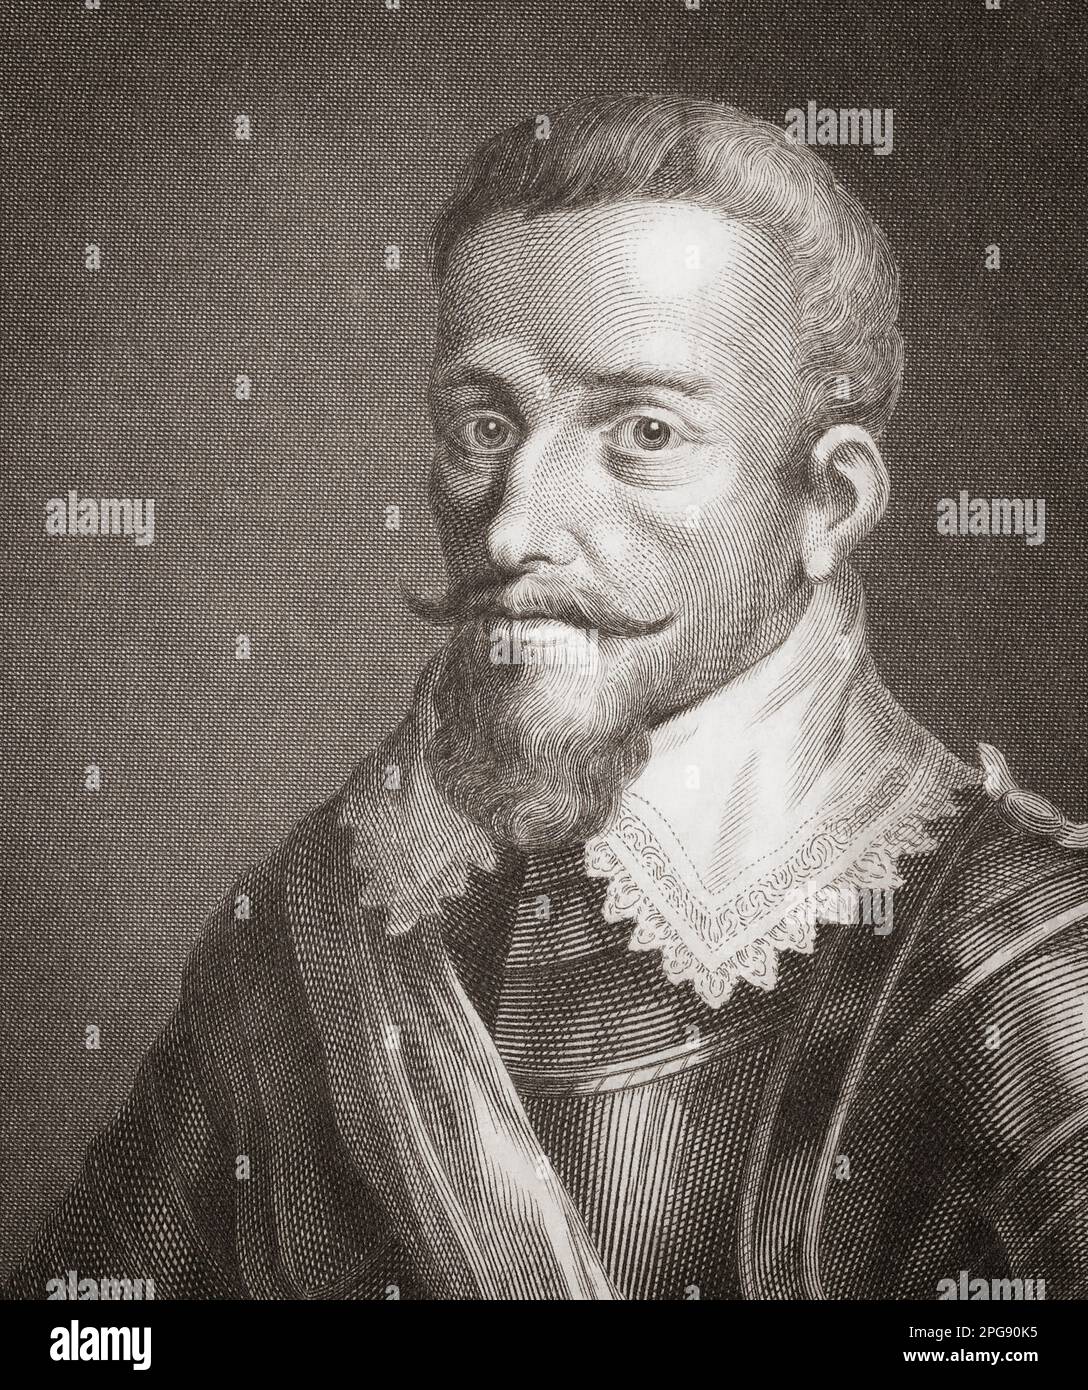 Jacob van Heemskerck, 1567 - 1607. Ammiraglio olandese ed esploratore artico. Dopo un'incisione di Jan Reckleben da una stampa di Jacob Houbraken. Foto Stock